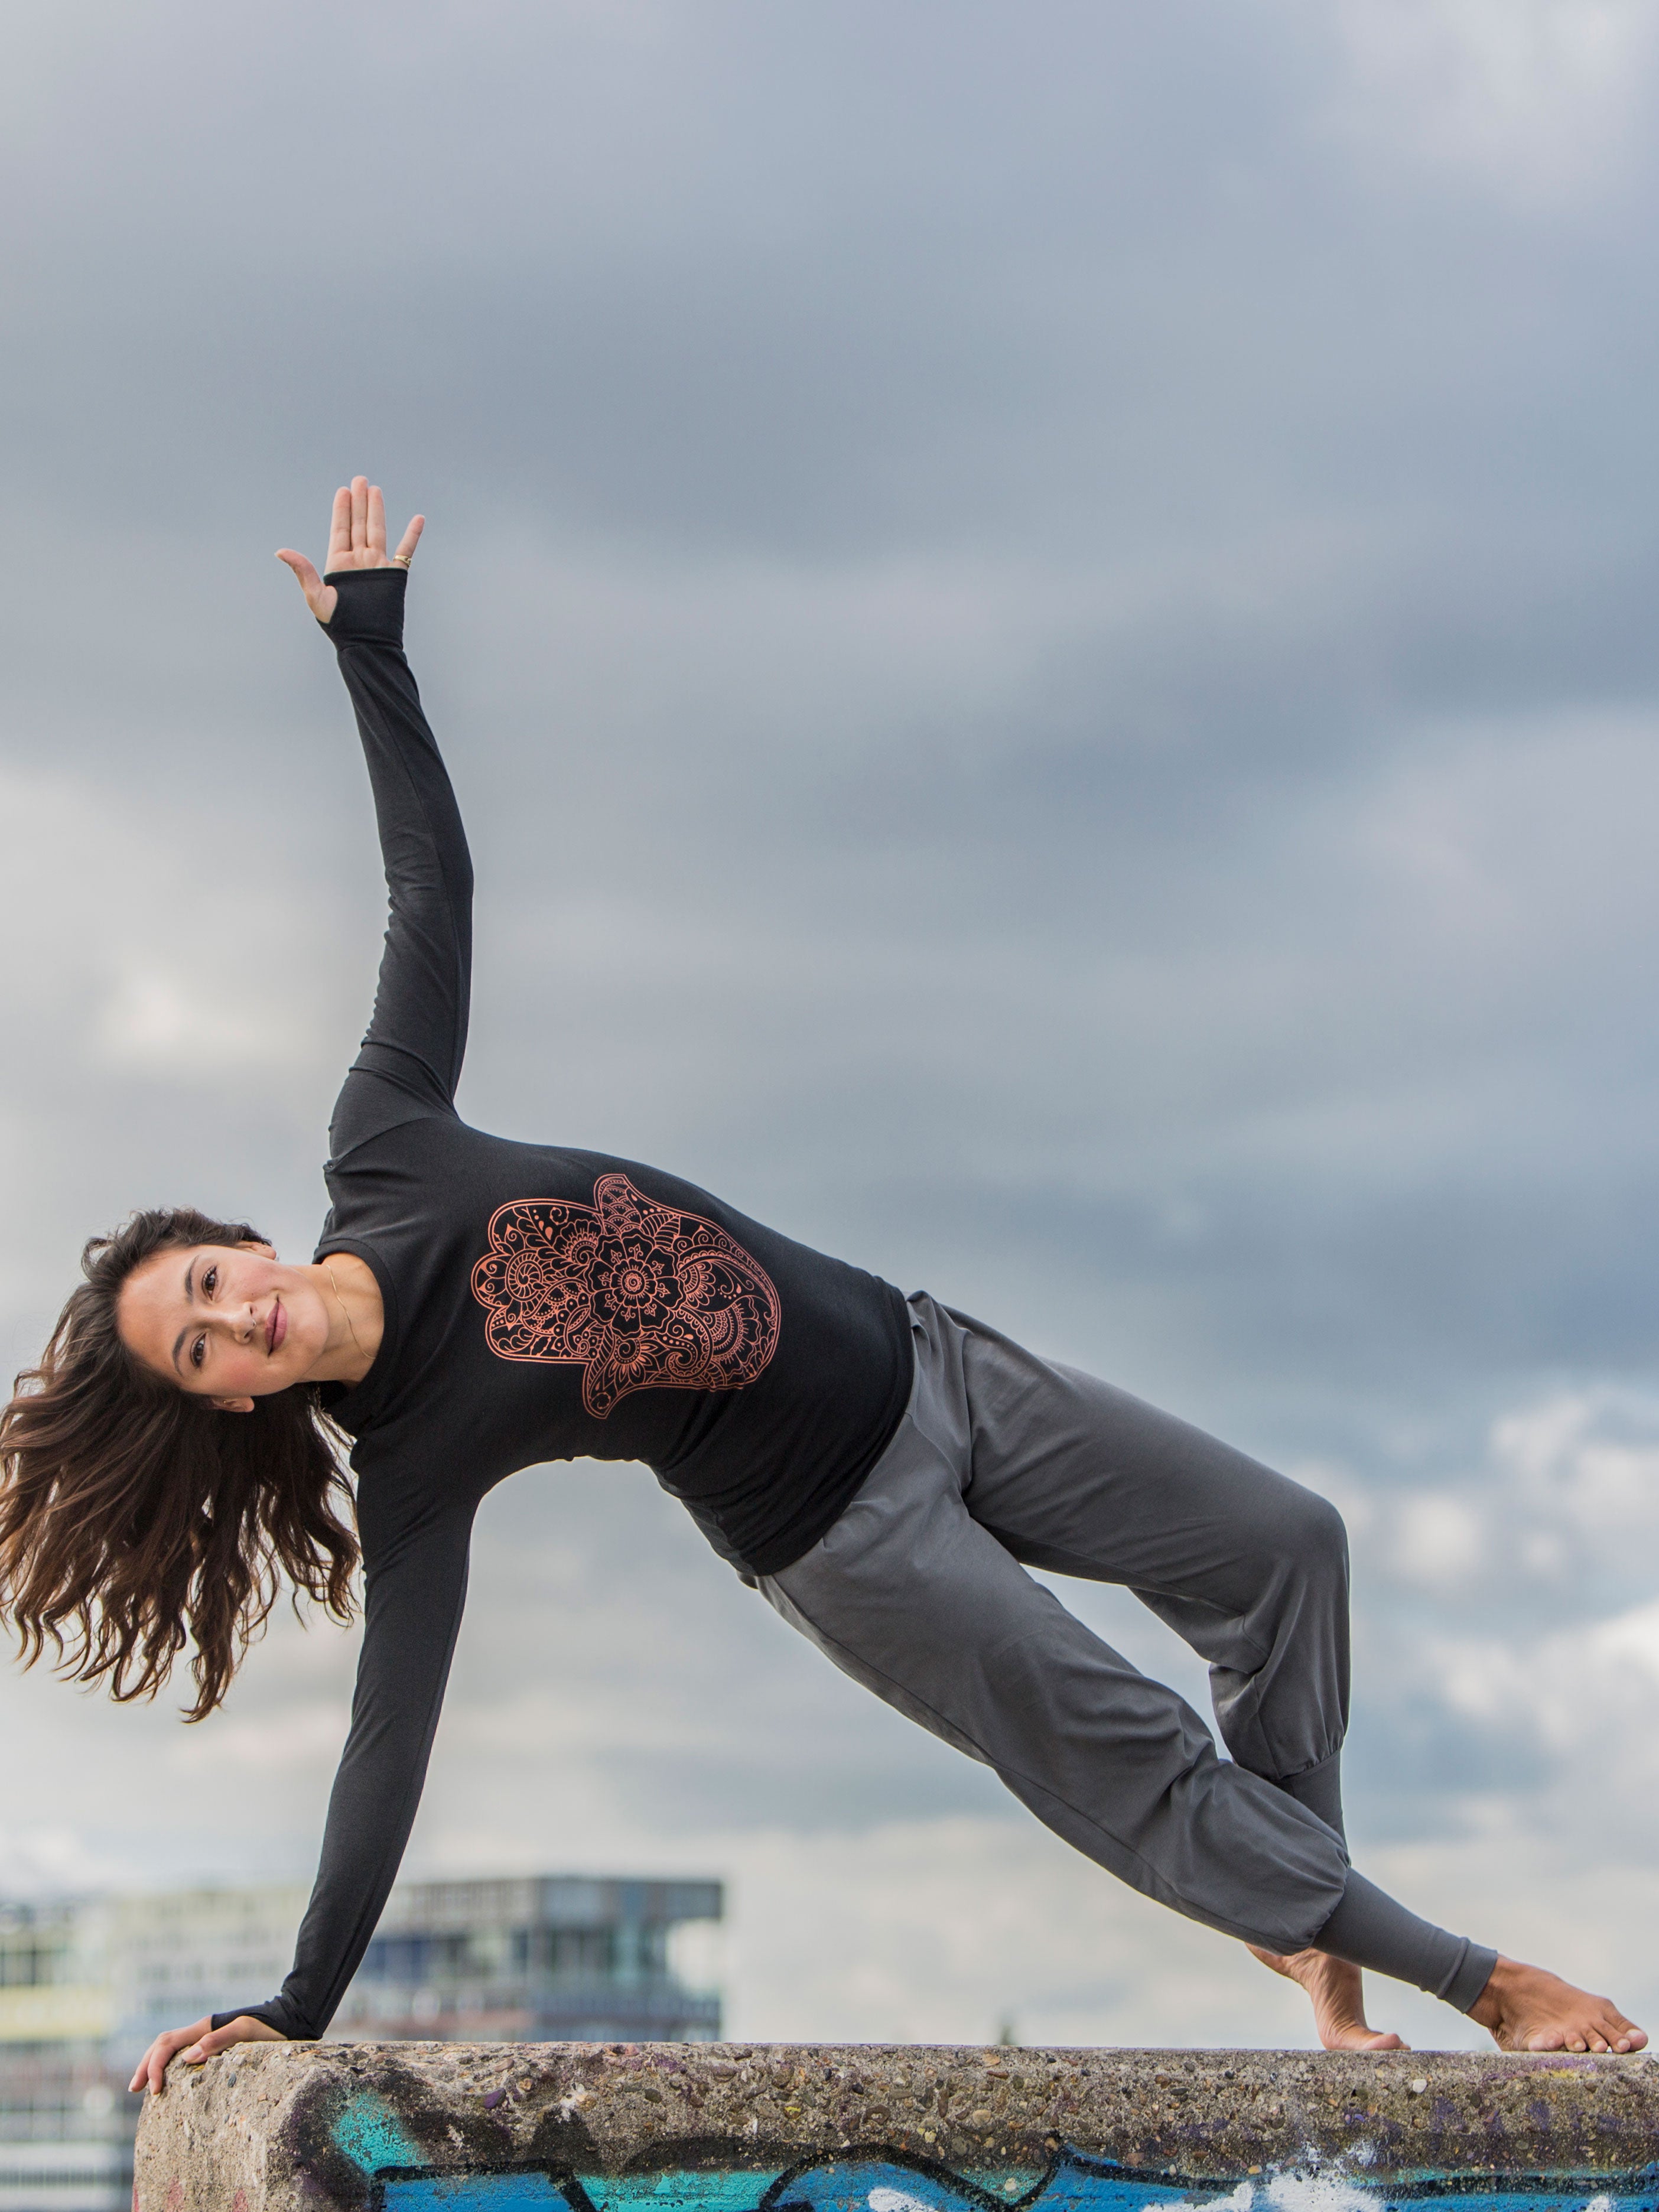 Yoga Dress - Buy Yoga Pants & Clothes for Women Online